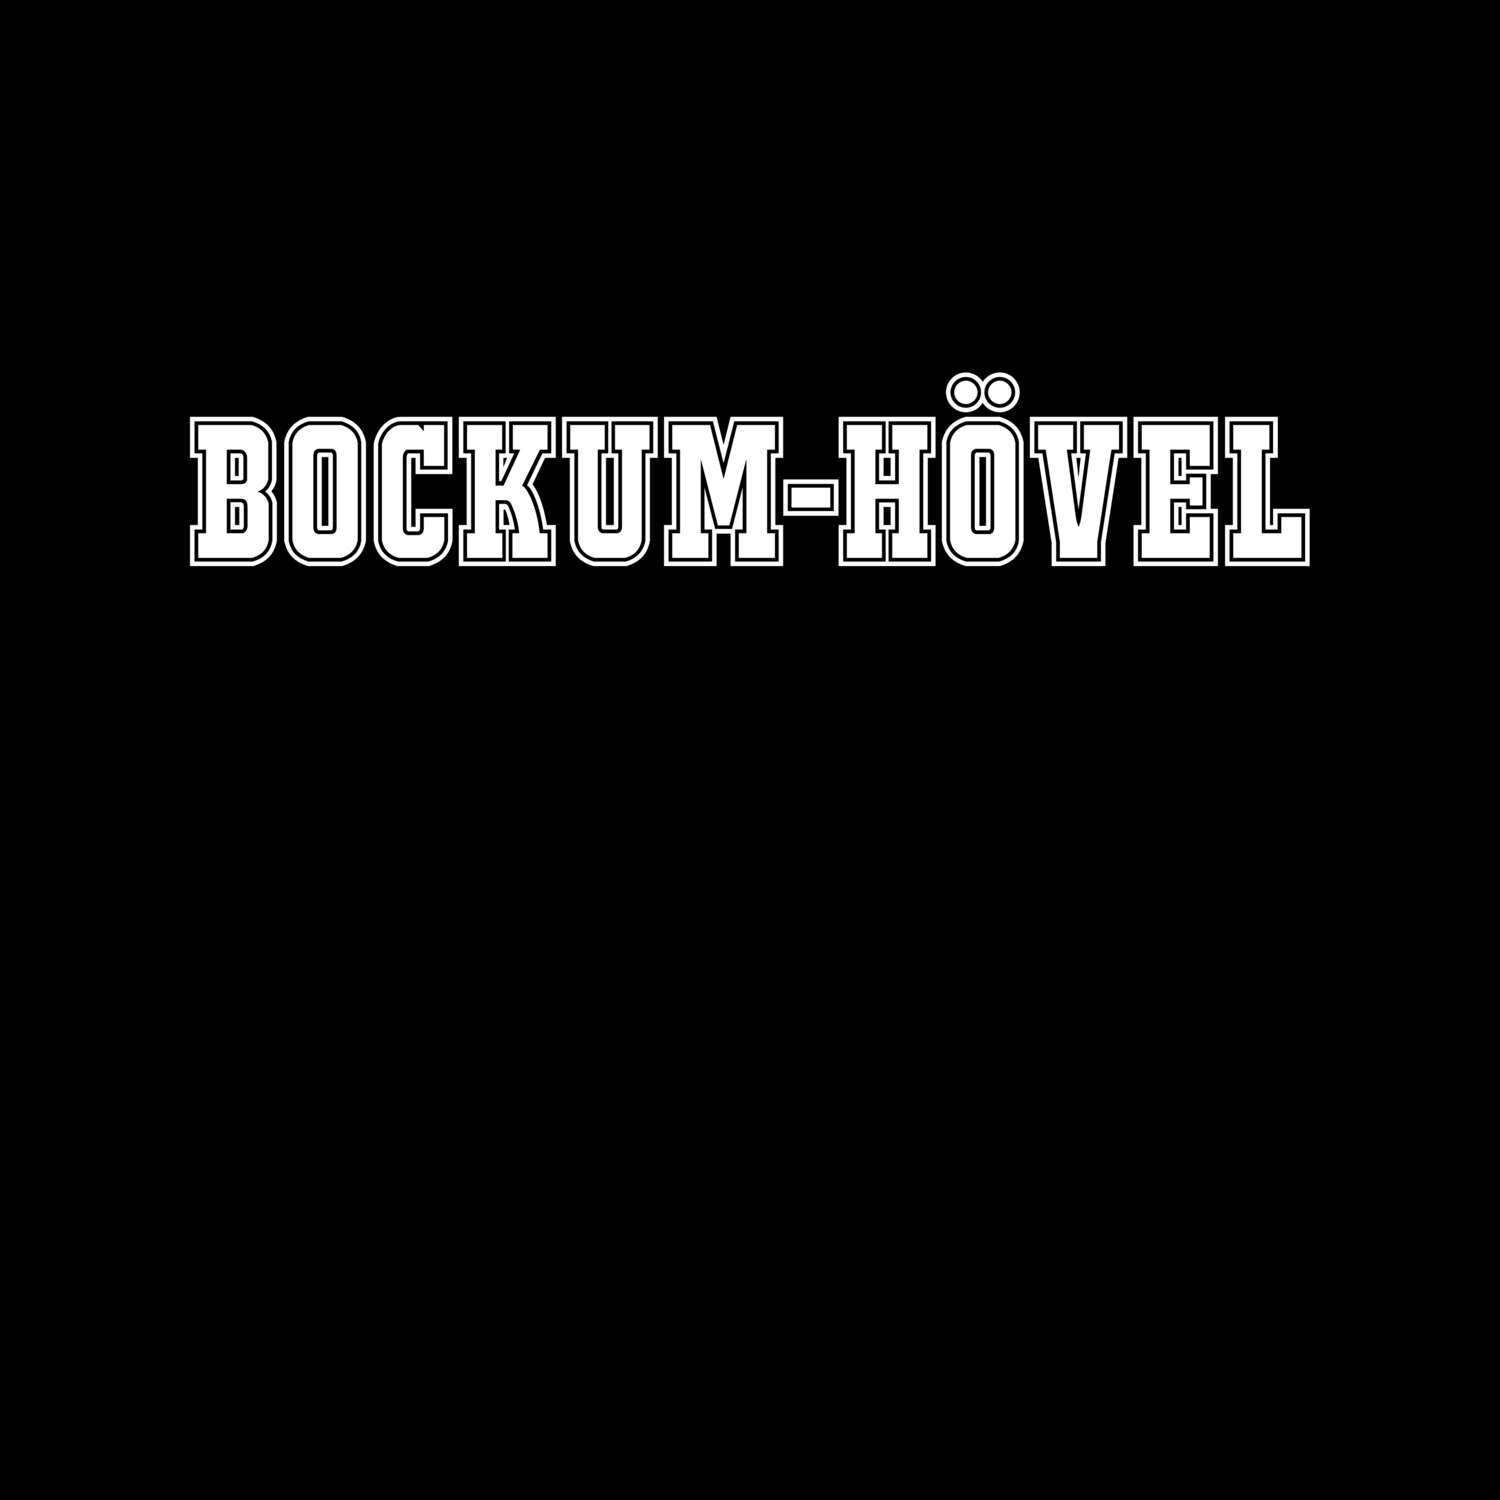 Bockum-Hövel T-Shirt »Classic«